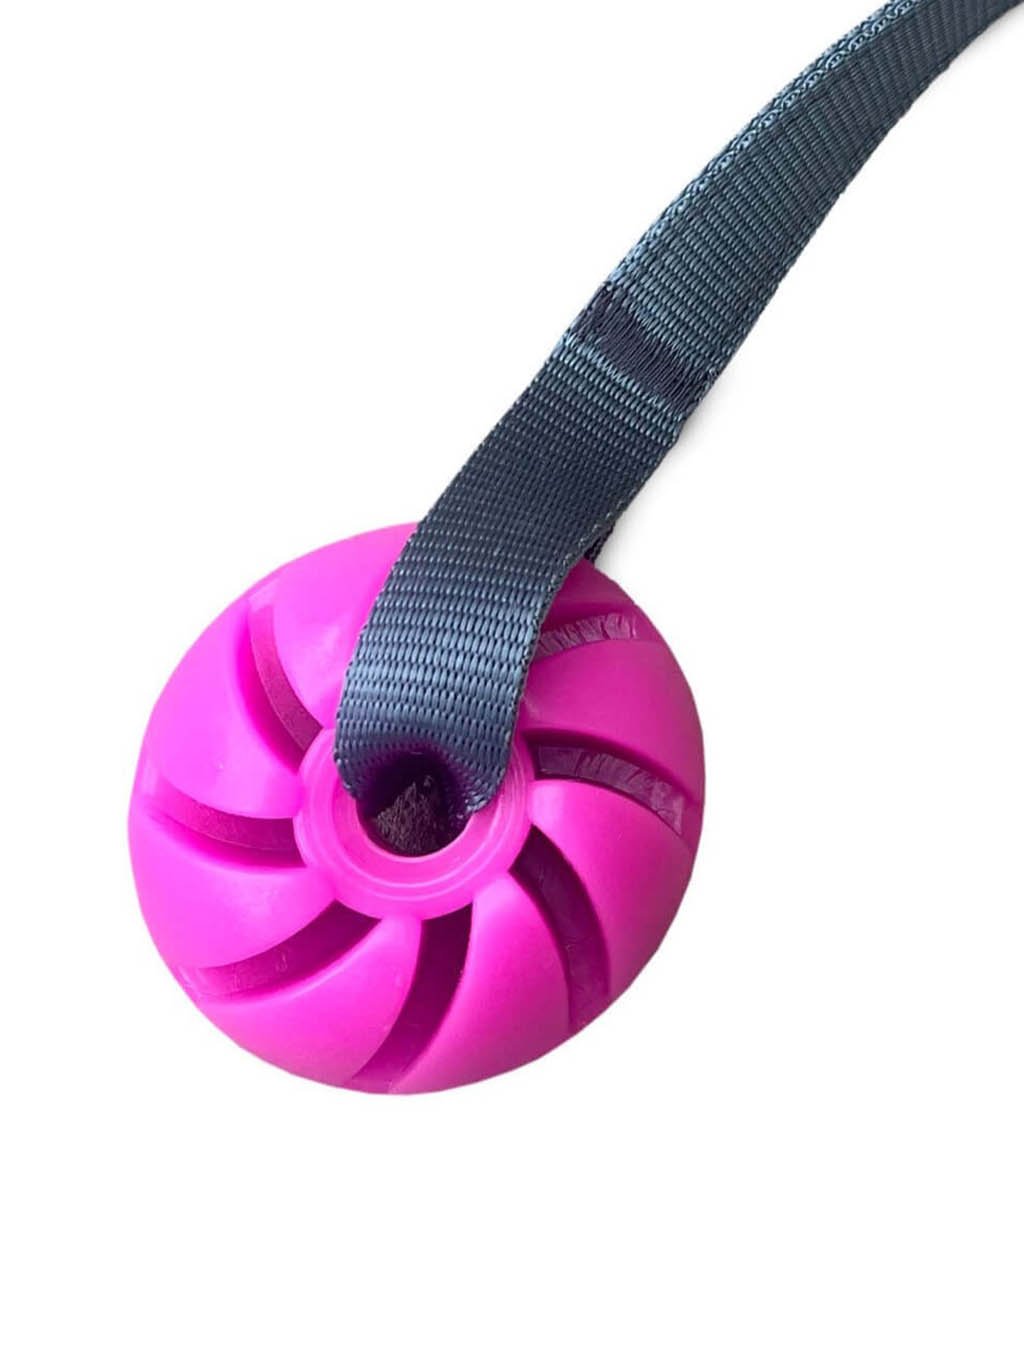 Růžový plovoucí míček 6 cm s tlapkovanou ručkou 4dox